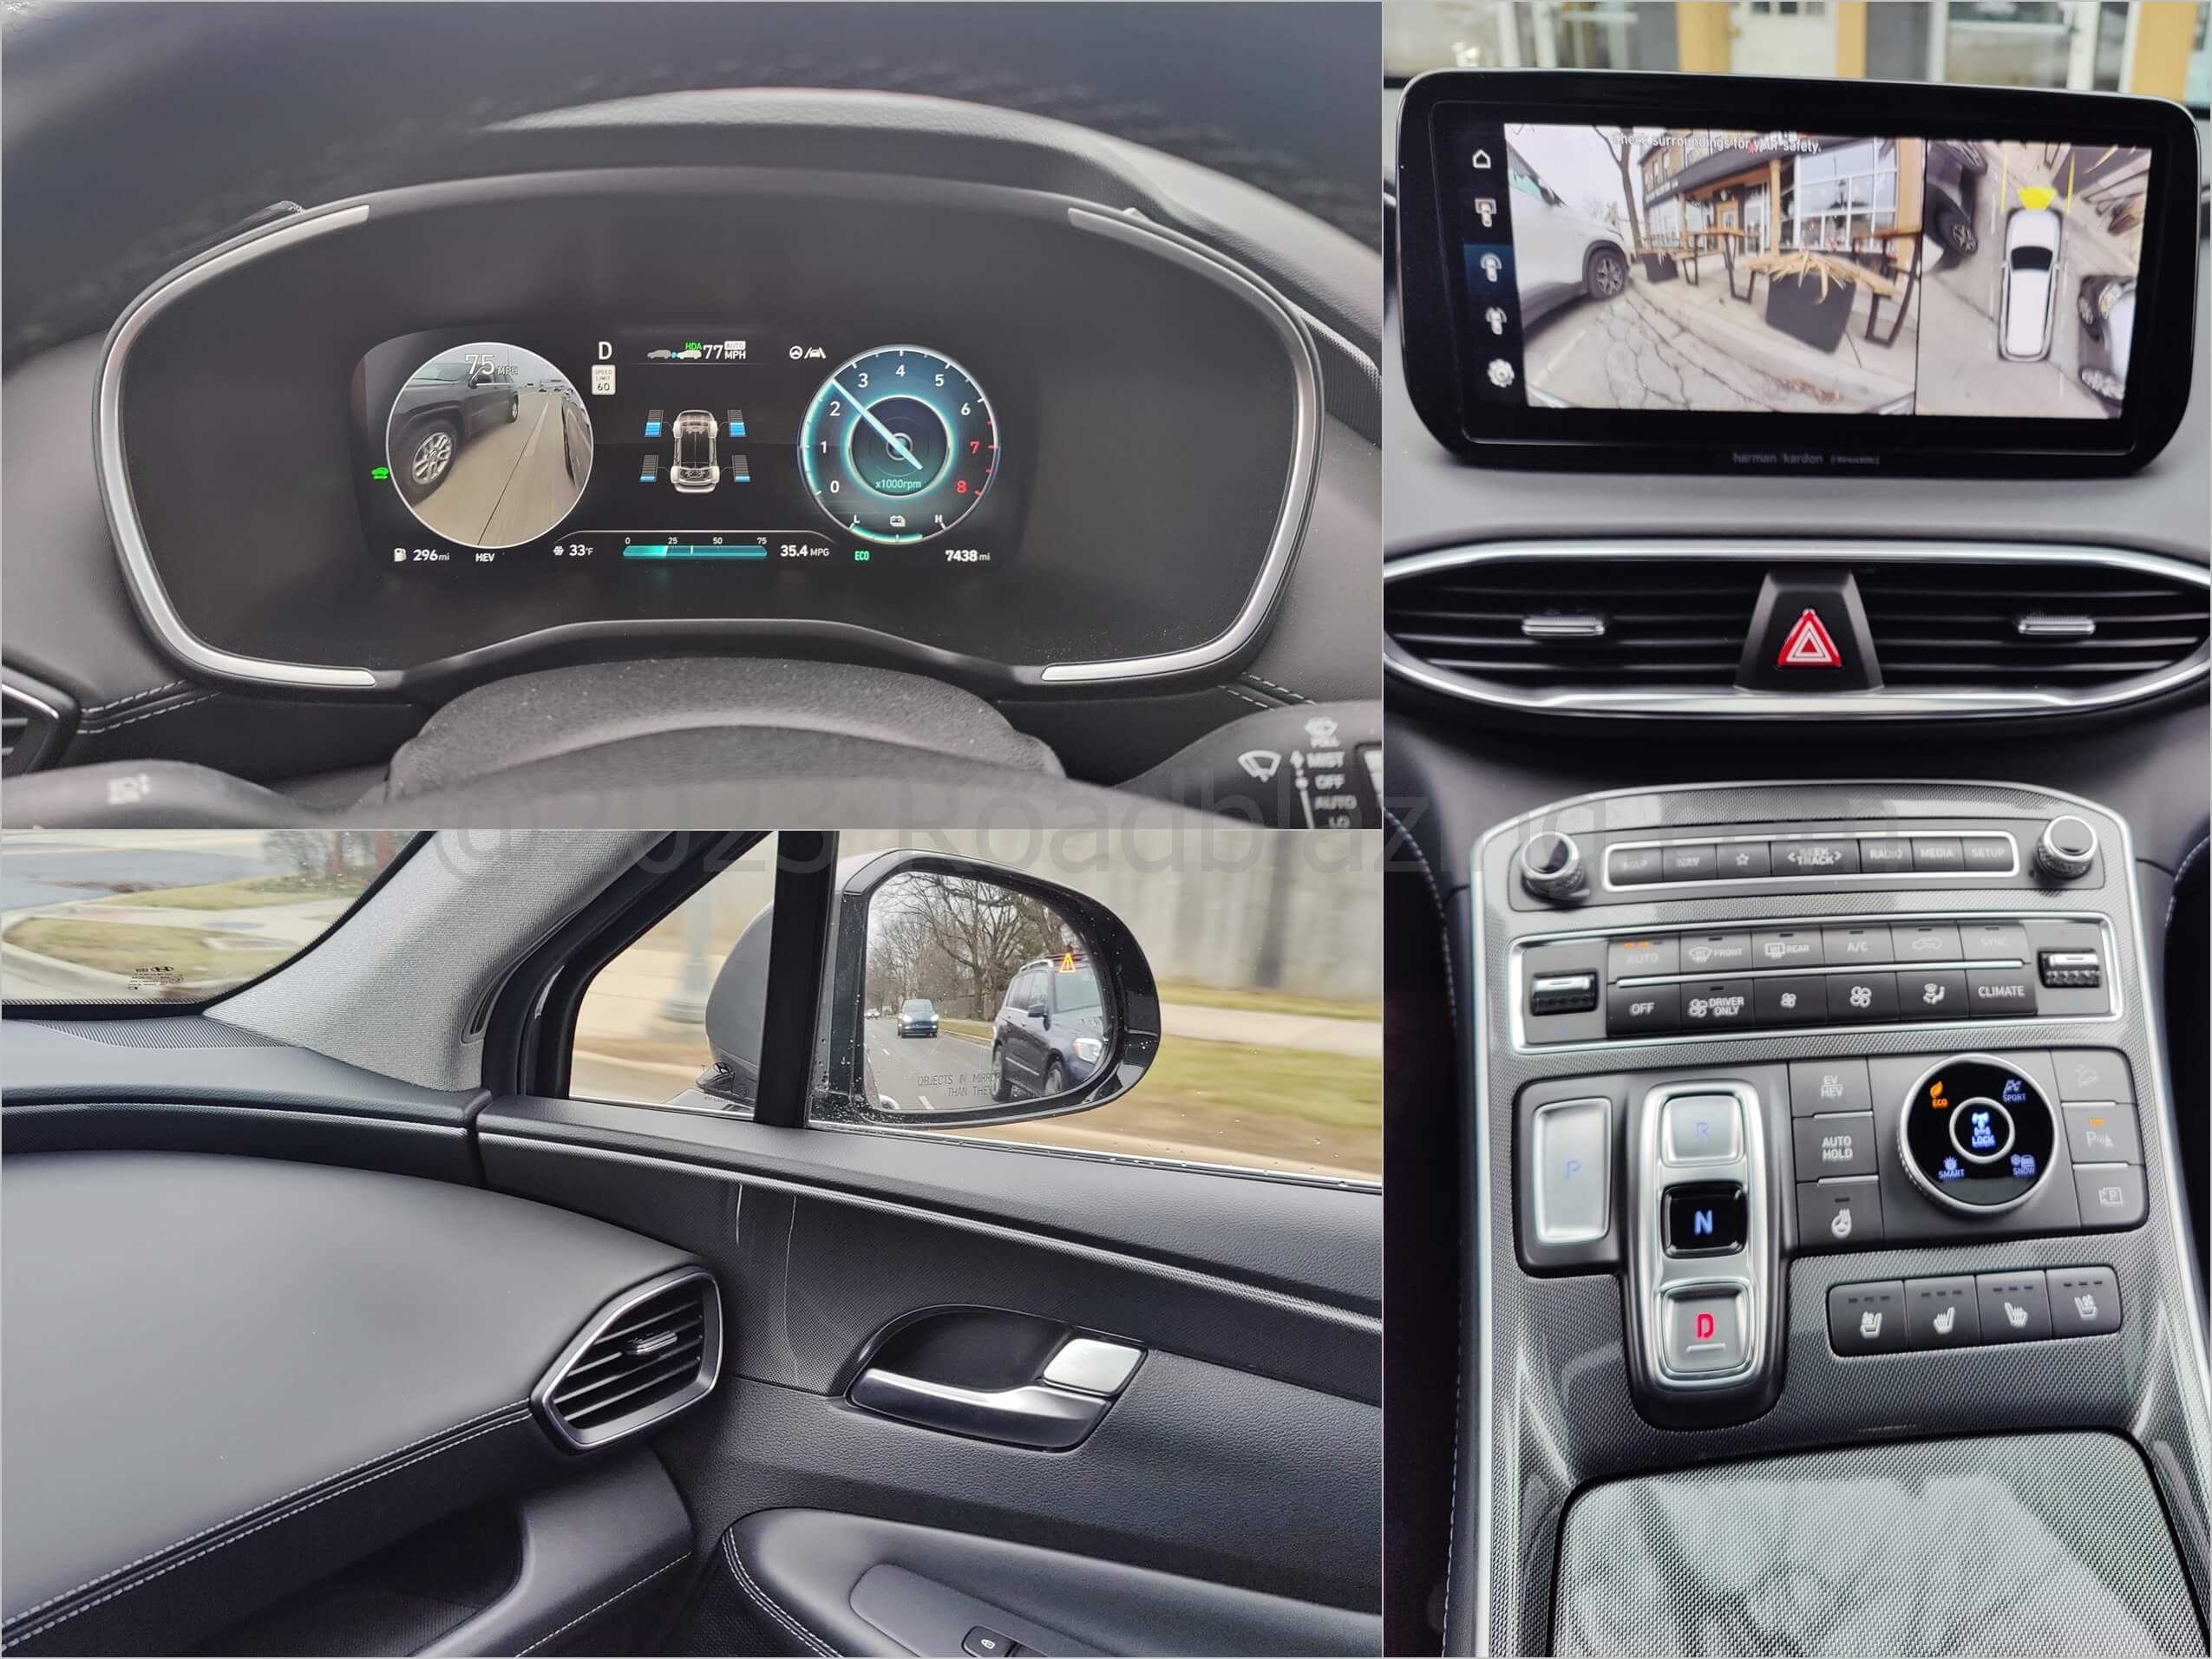 2022 Hyundai Santa Fe Limited PHEV AWD: visual advanced driver assist safety includes lane watch, blind sport warn & avoidance, surround camera w/ park warning